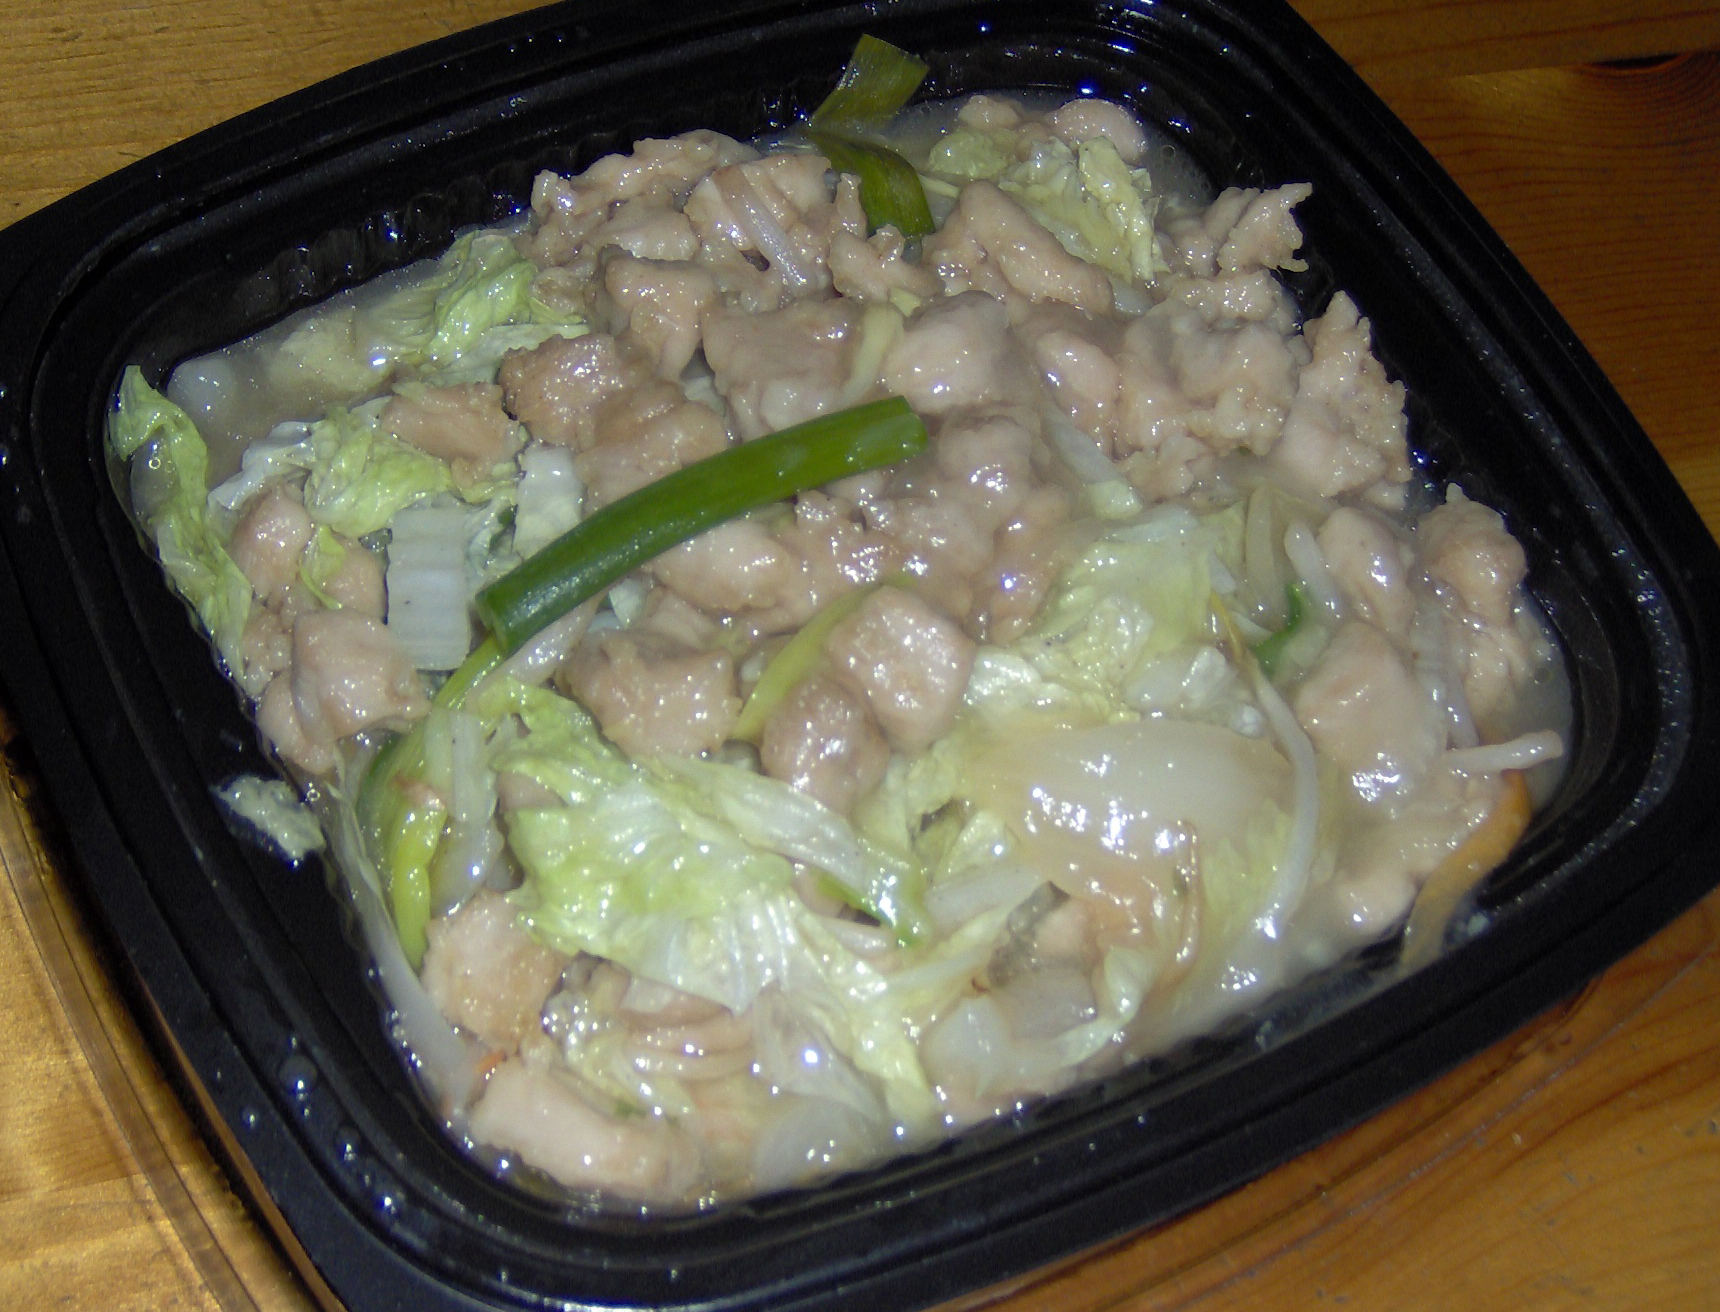 File:Chicken chow mein.jpg - Wikipedia